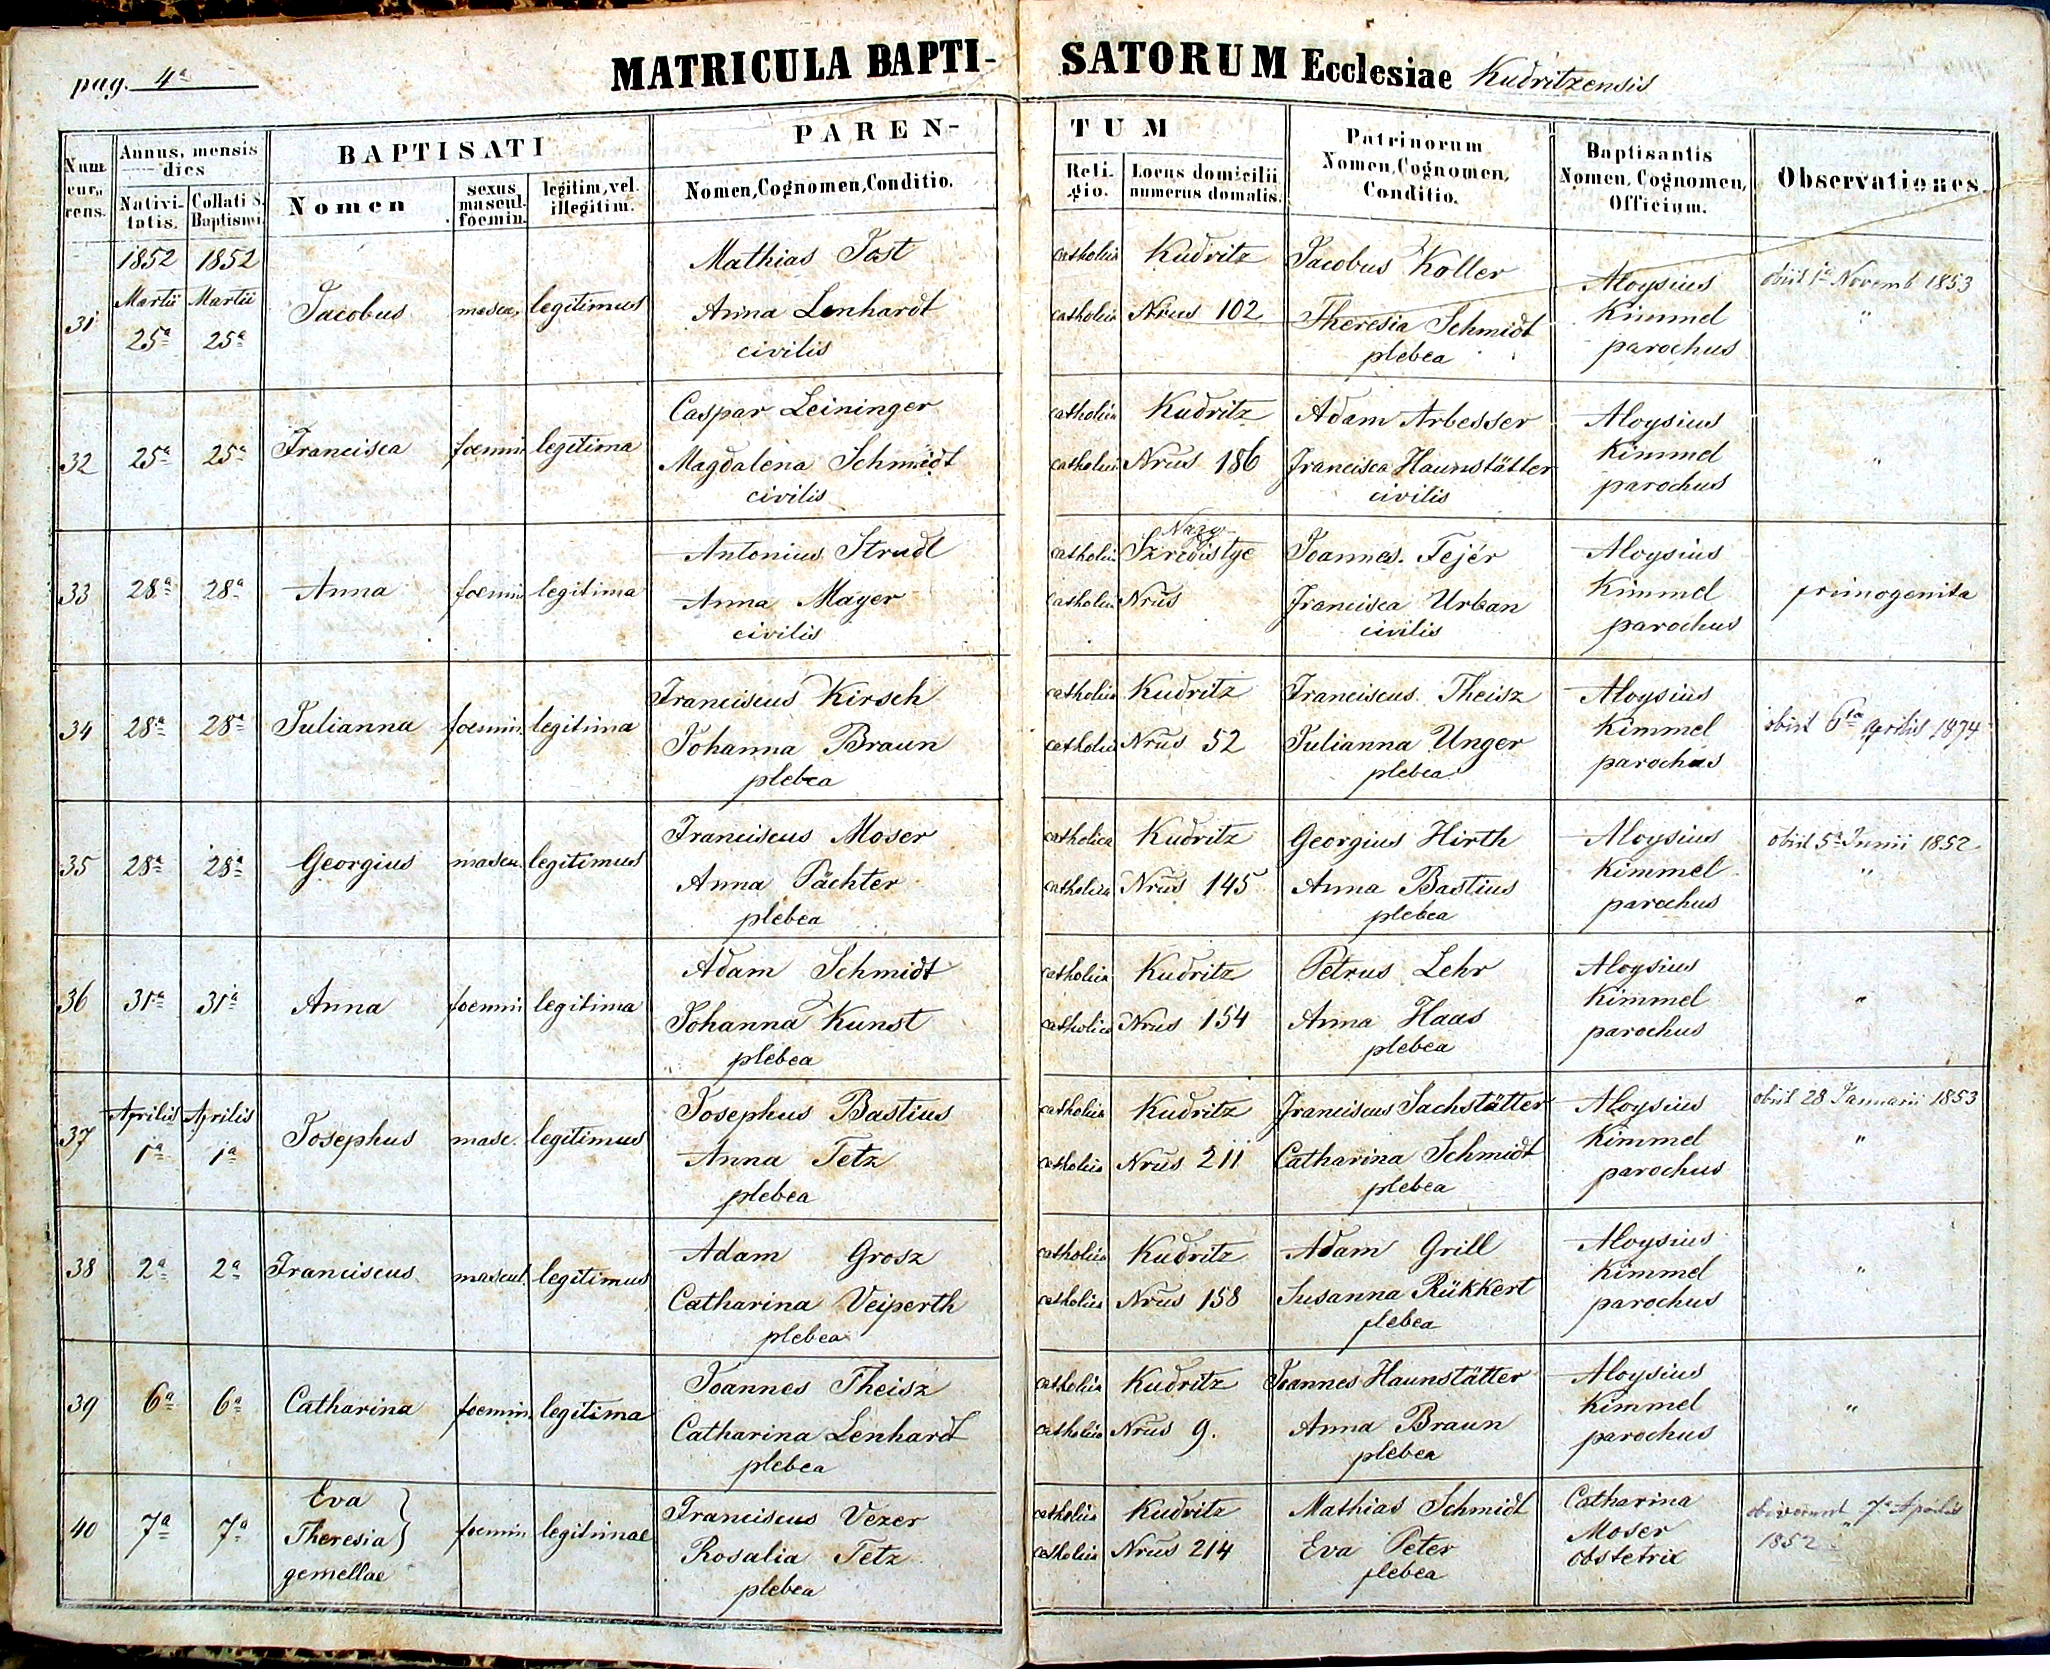 images/church_records/BIRTHS/1852-1870B/004